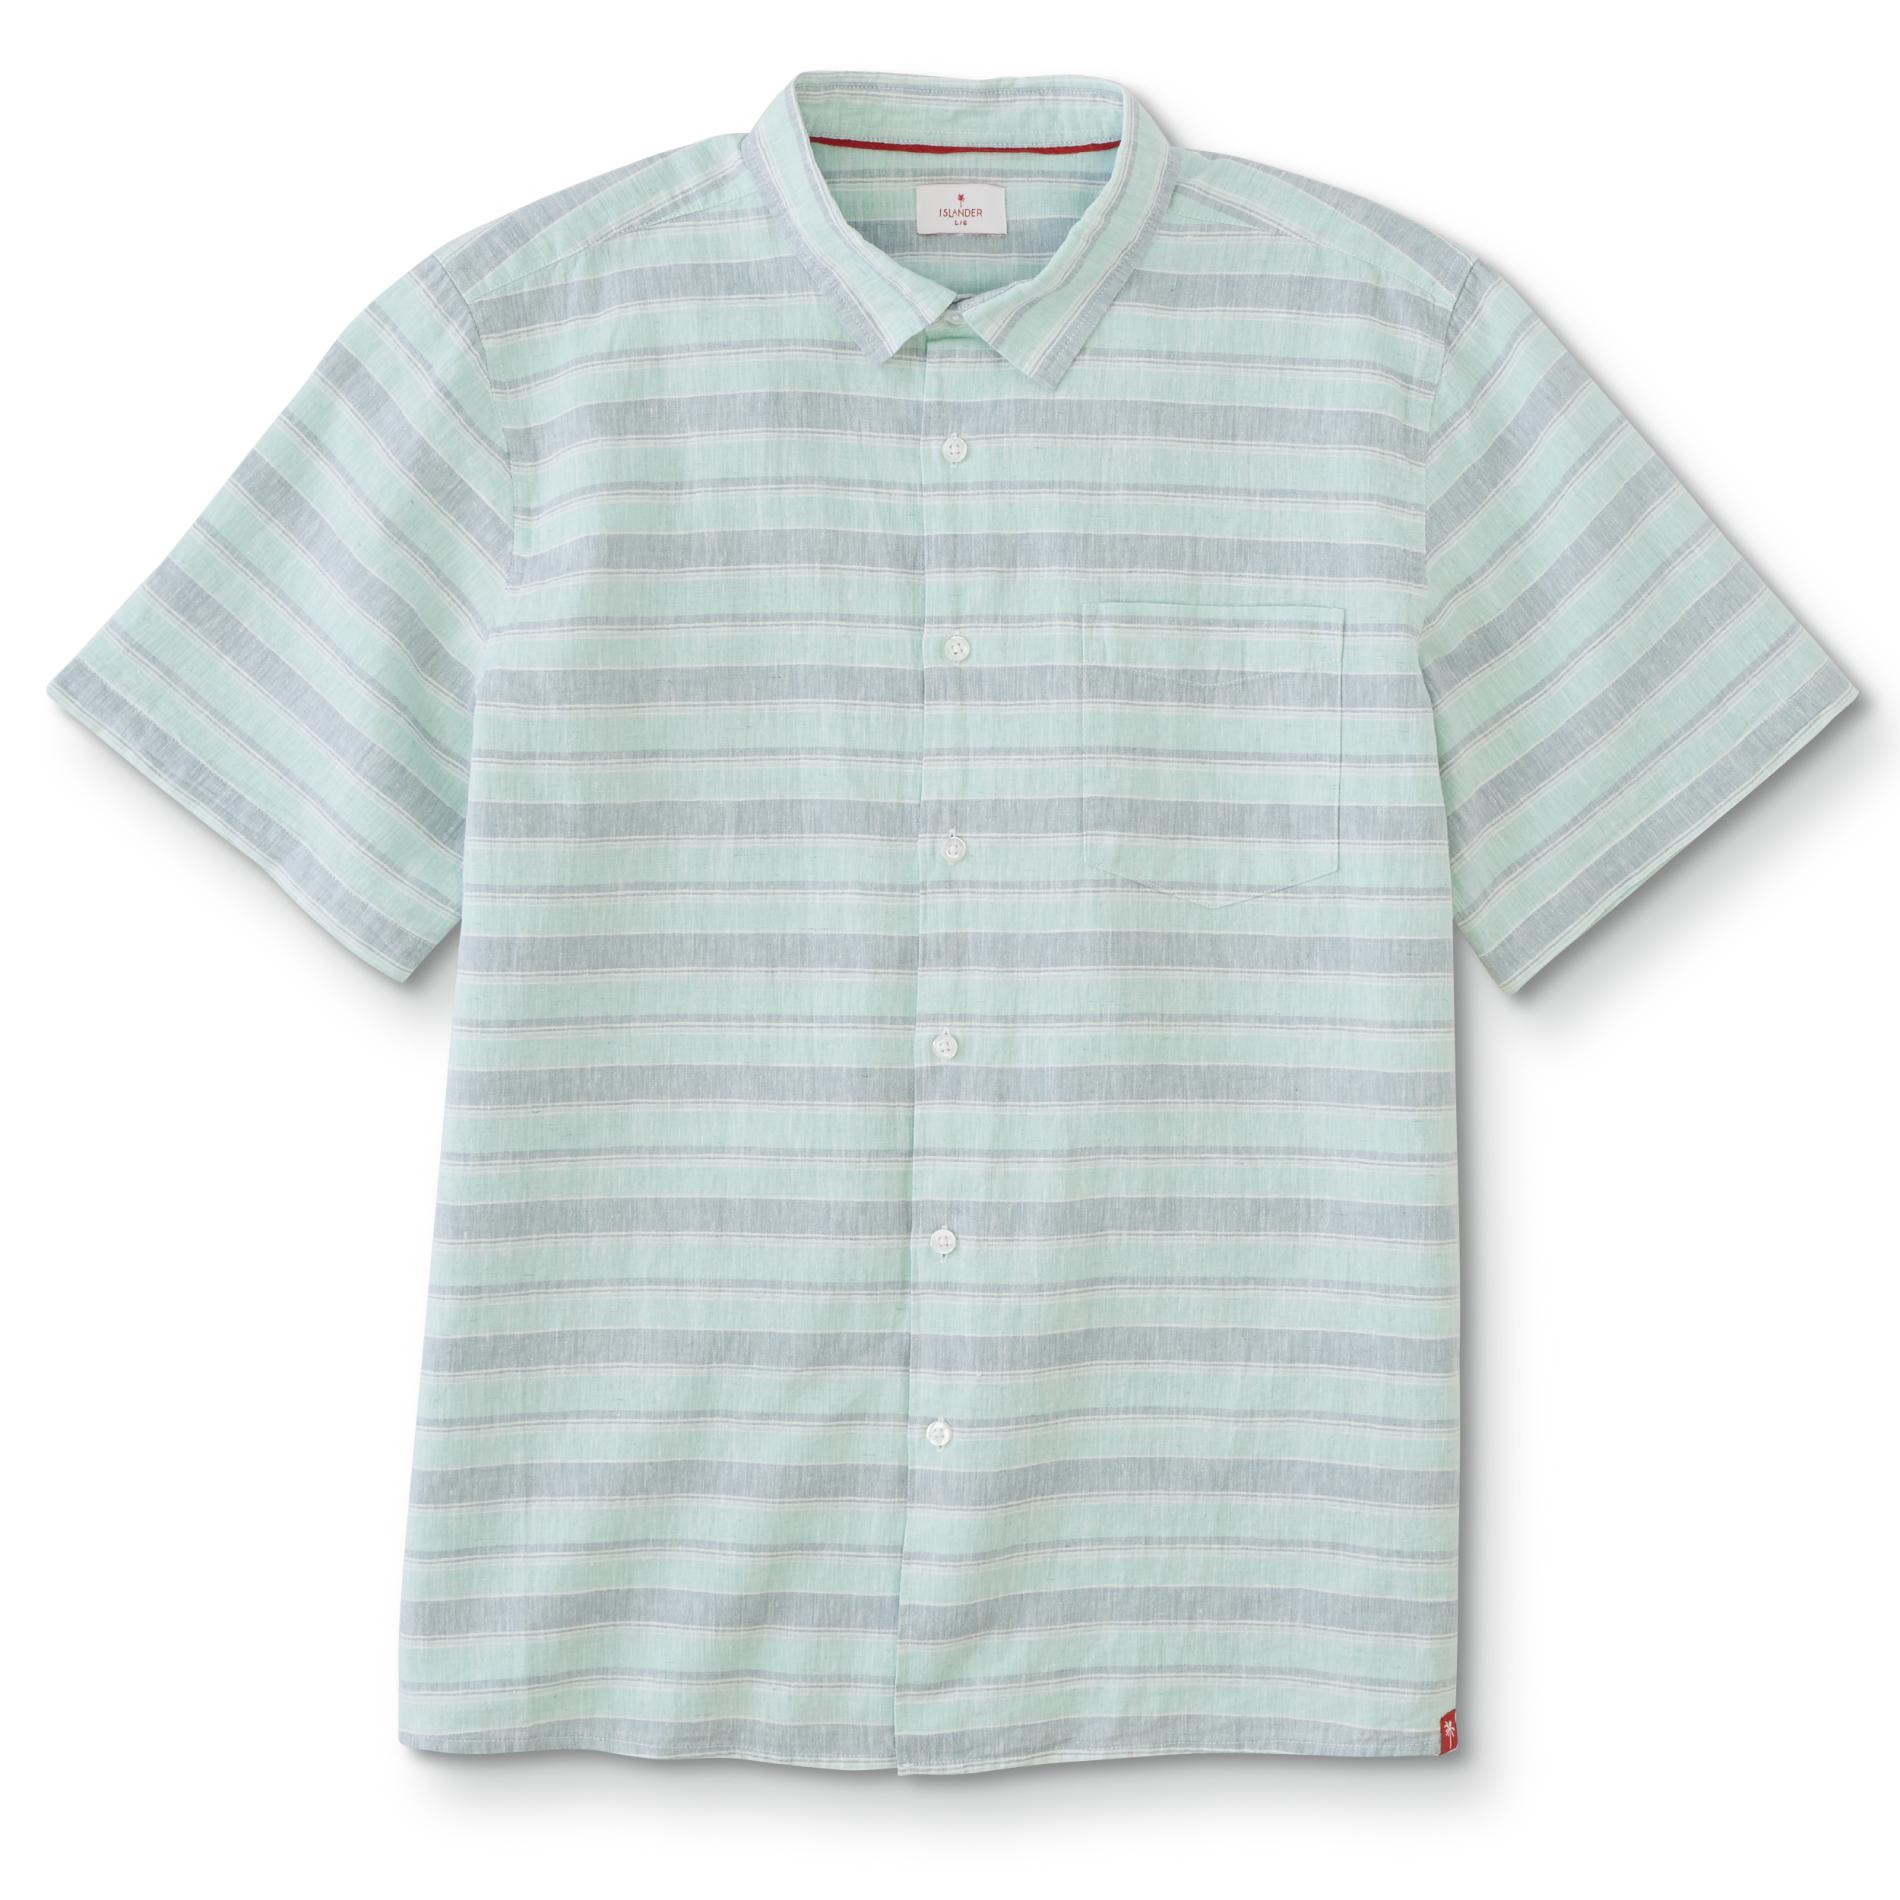 Islander Men's Short-Sleeve Linen Shirt - Striped